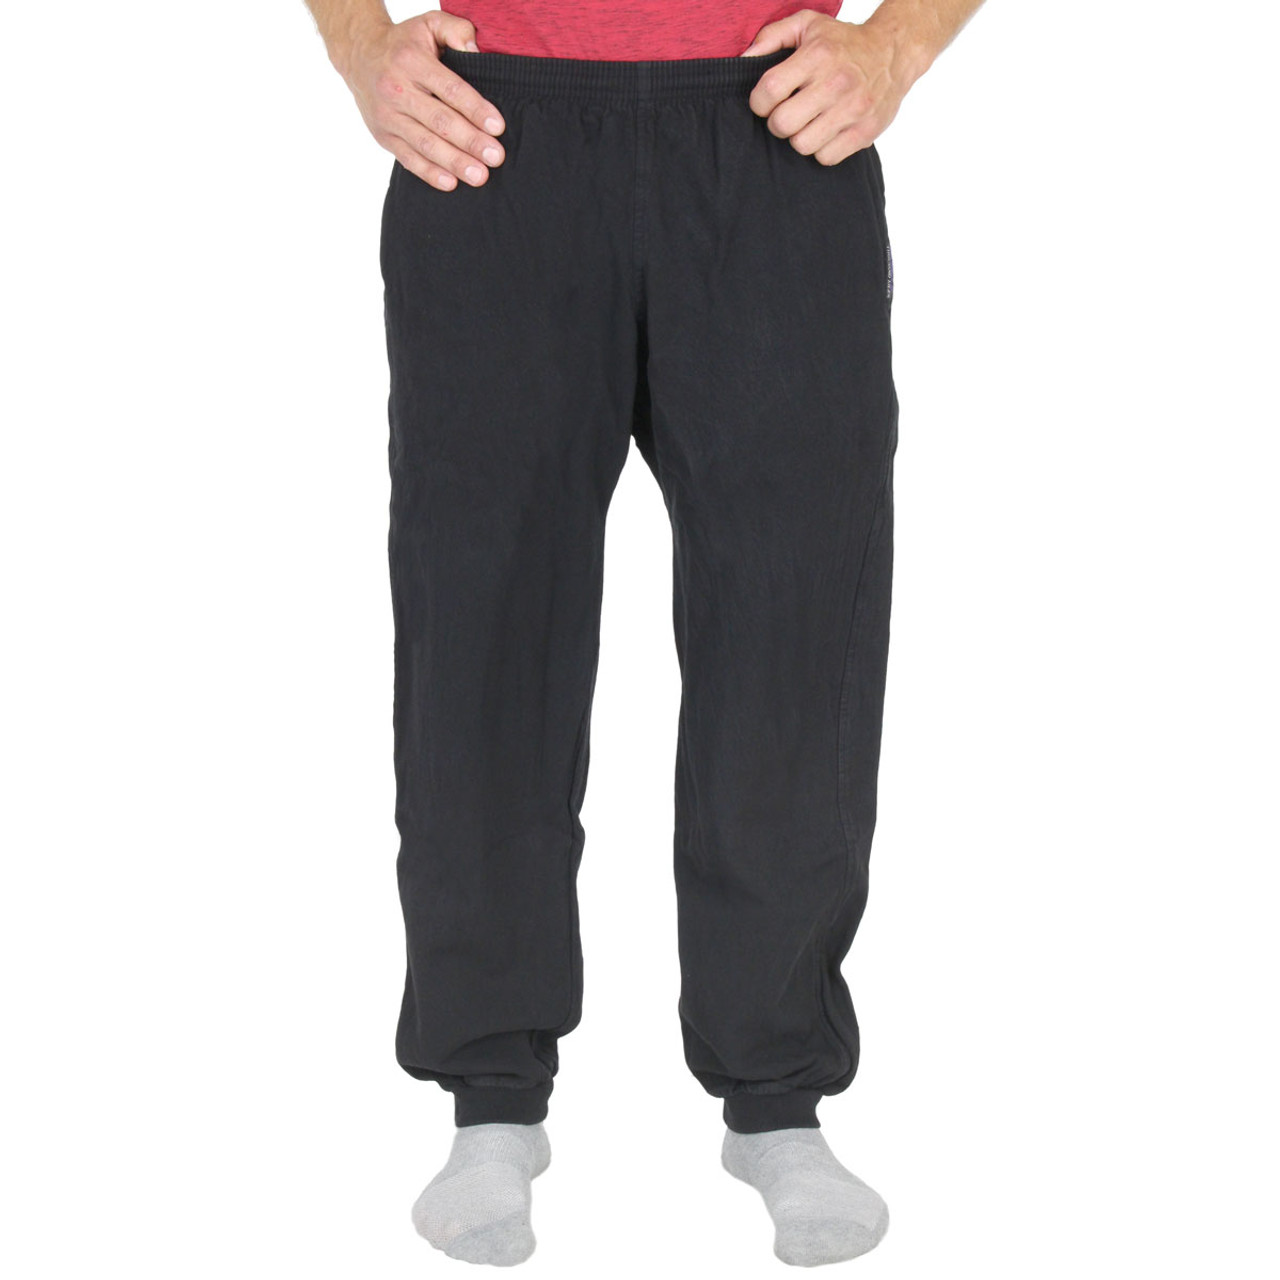 Dance jogger Track Pants - Unisex - Black / White / Grey - Nachke Dance  fashion